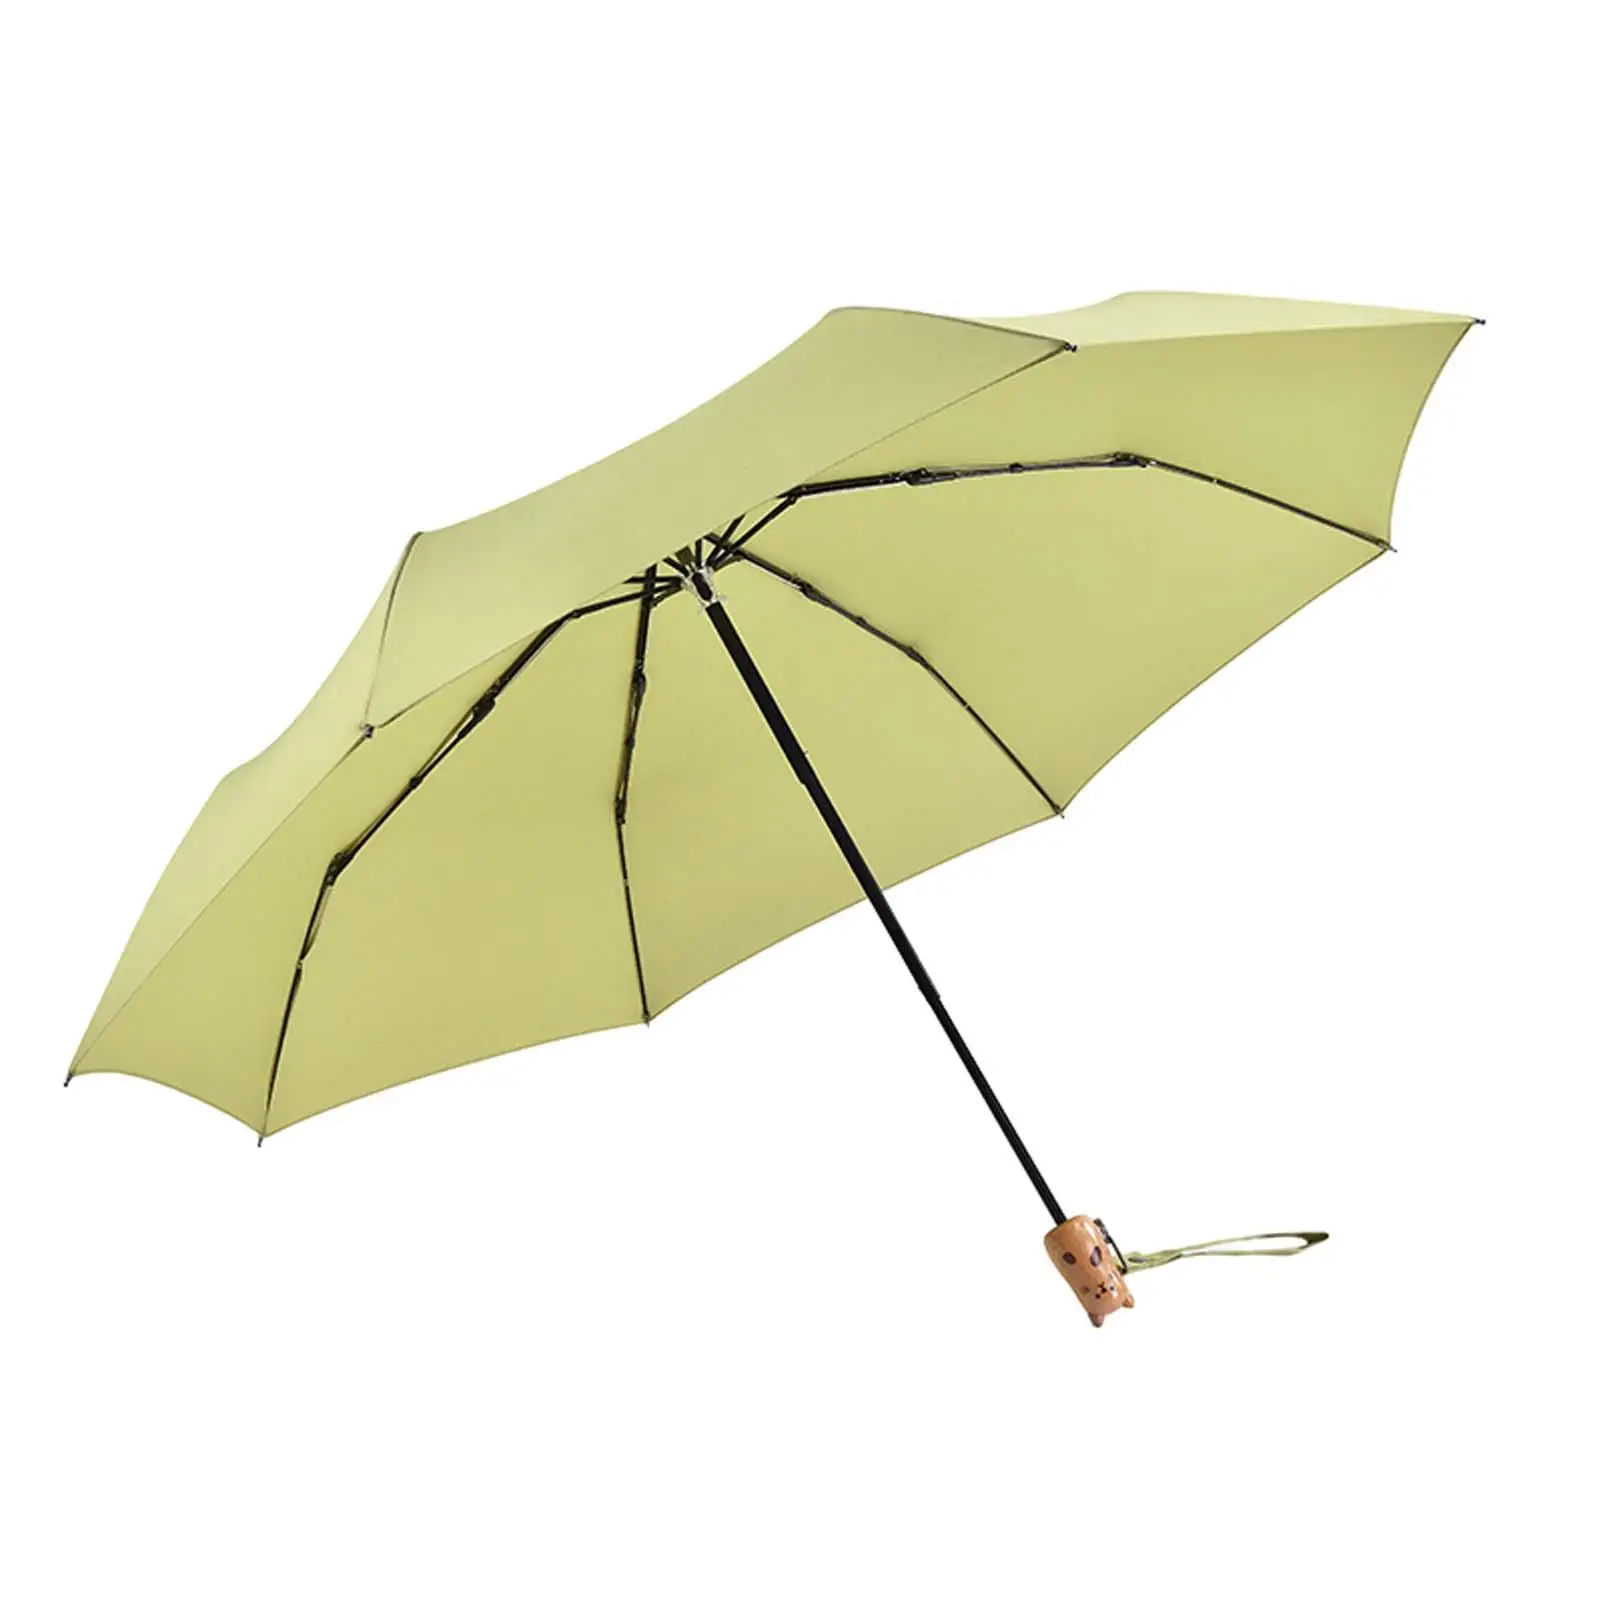 Travel Umbrella for Rain Compact Manual Packable Lightweight Simple Heavy Duty Sturdy Folding Umbrella Casual Umbrella